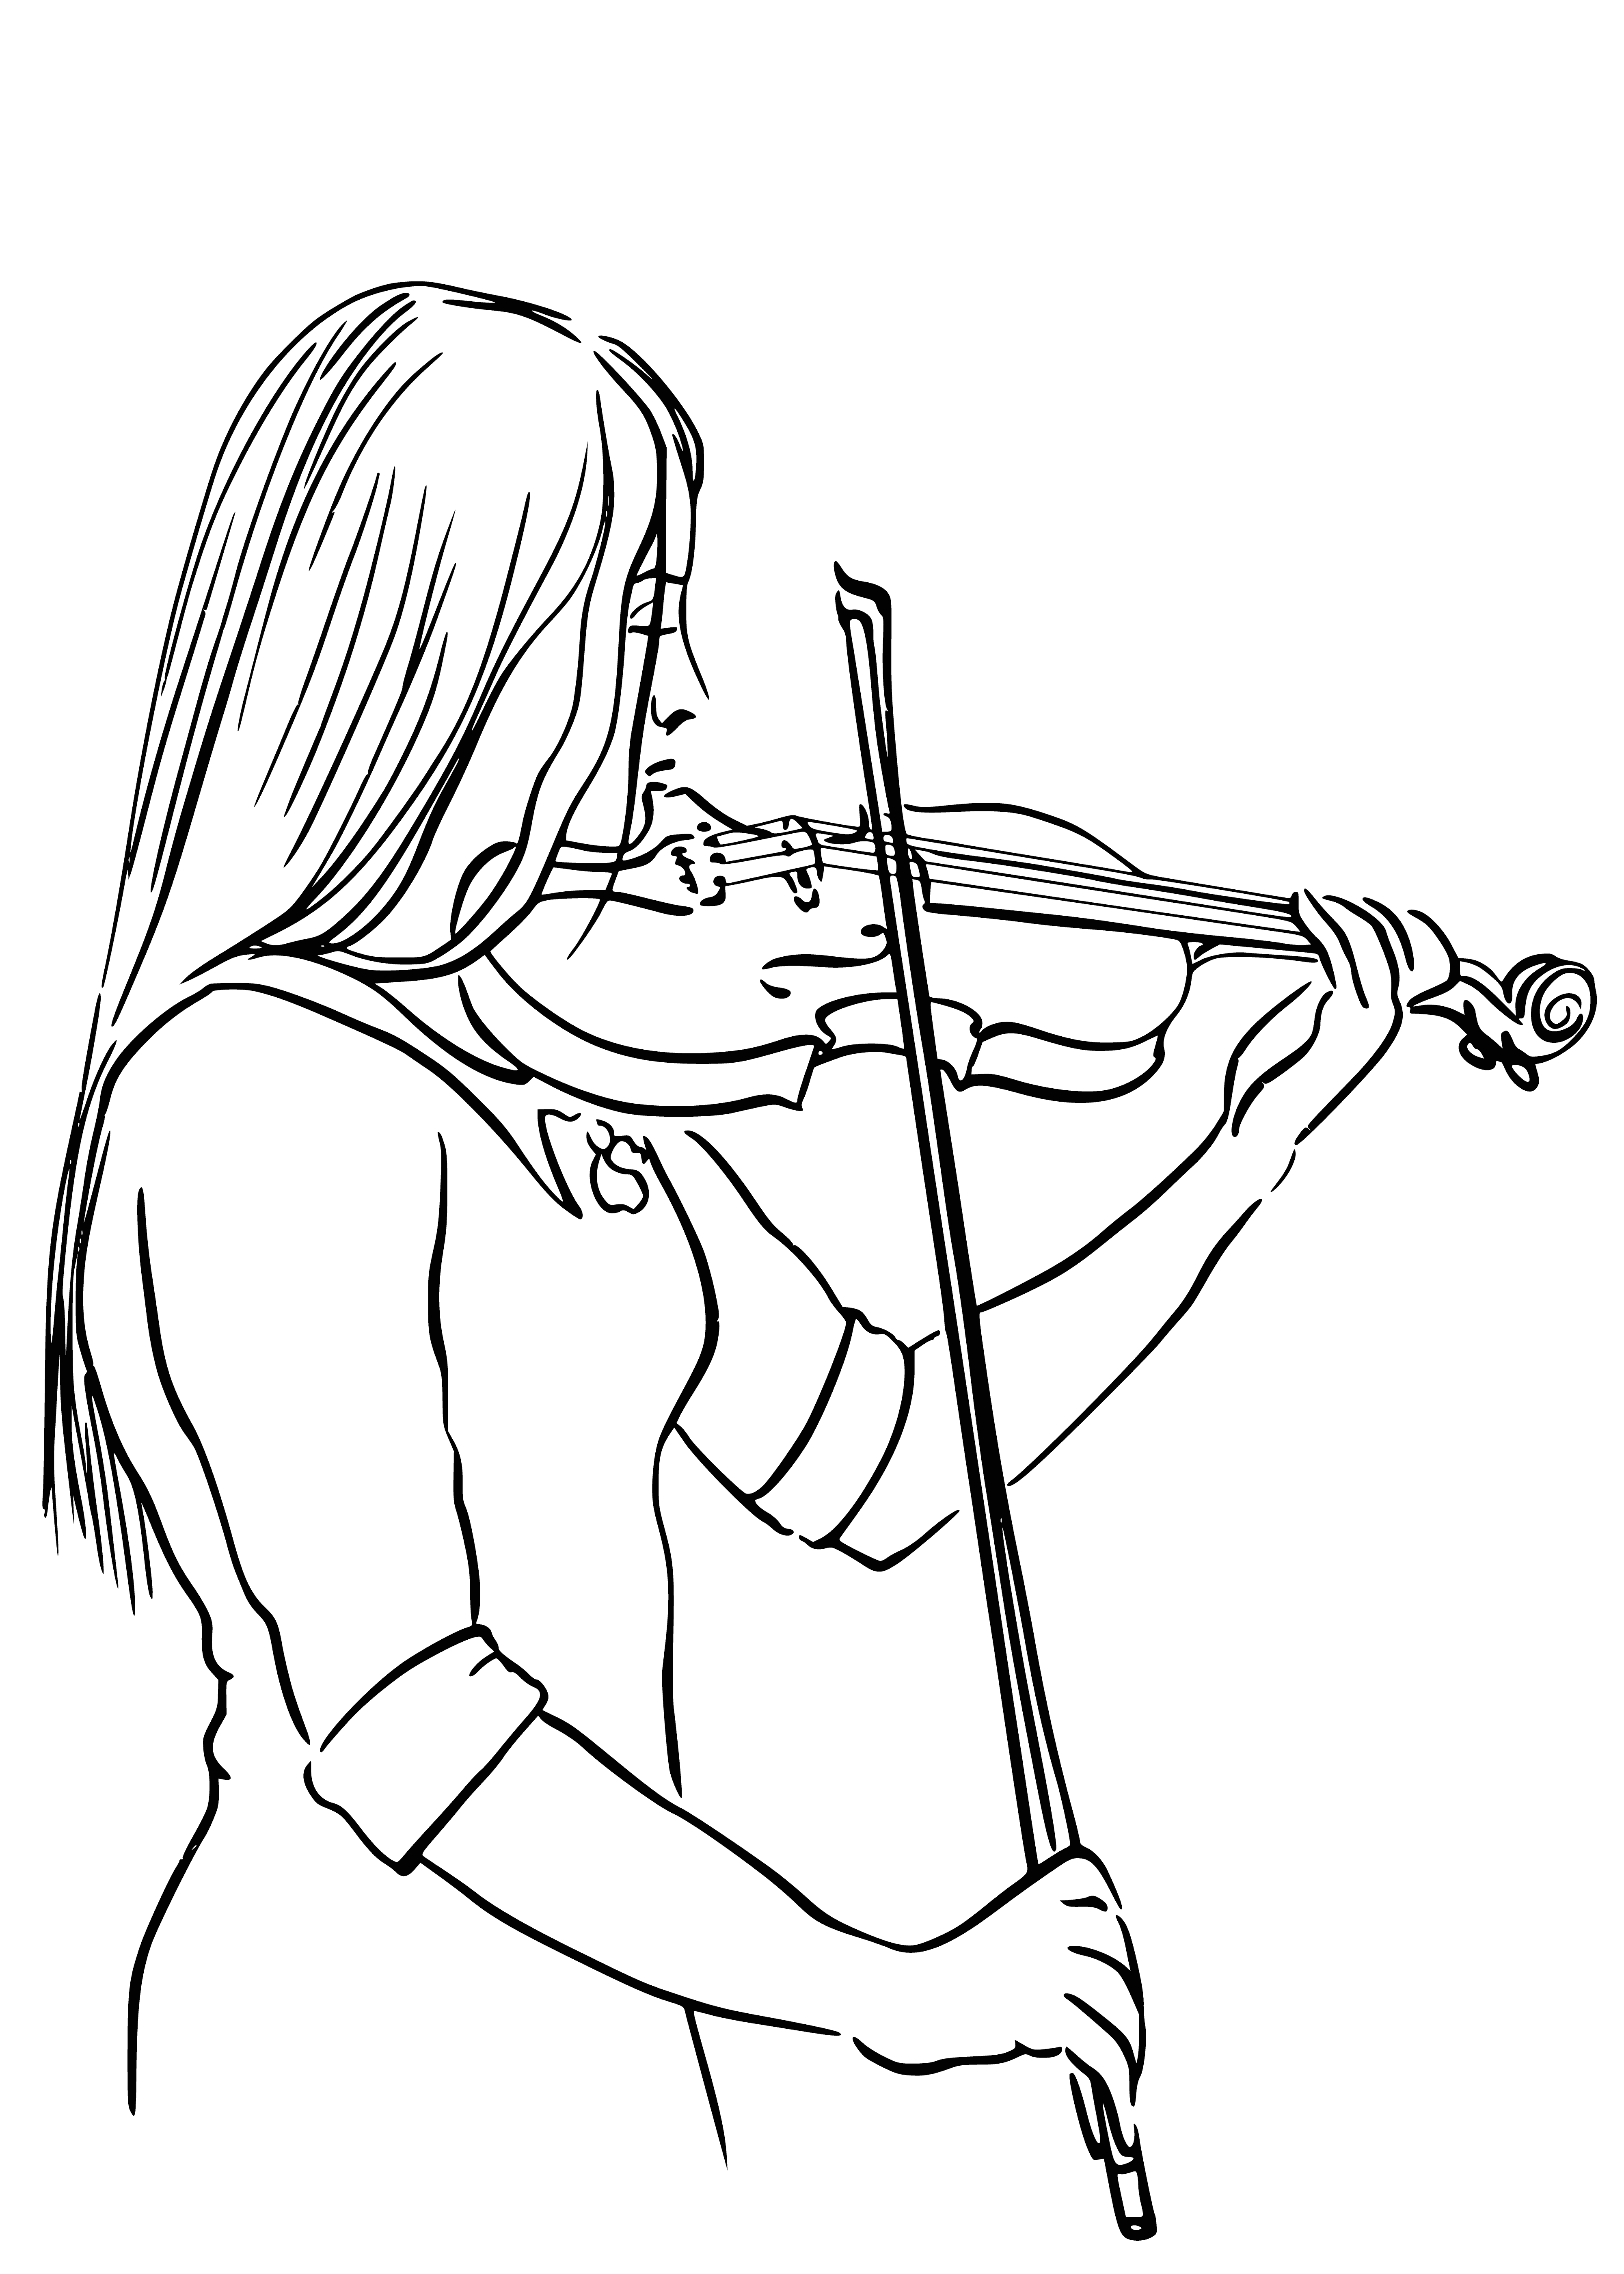 Violinist Malseite